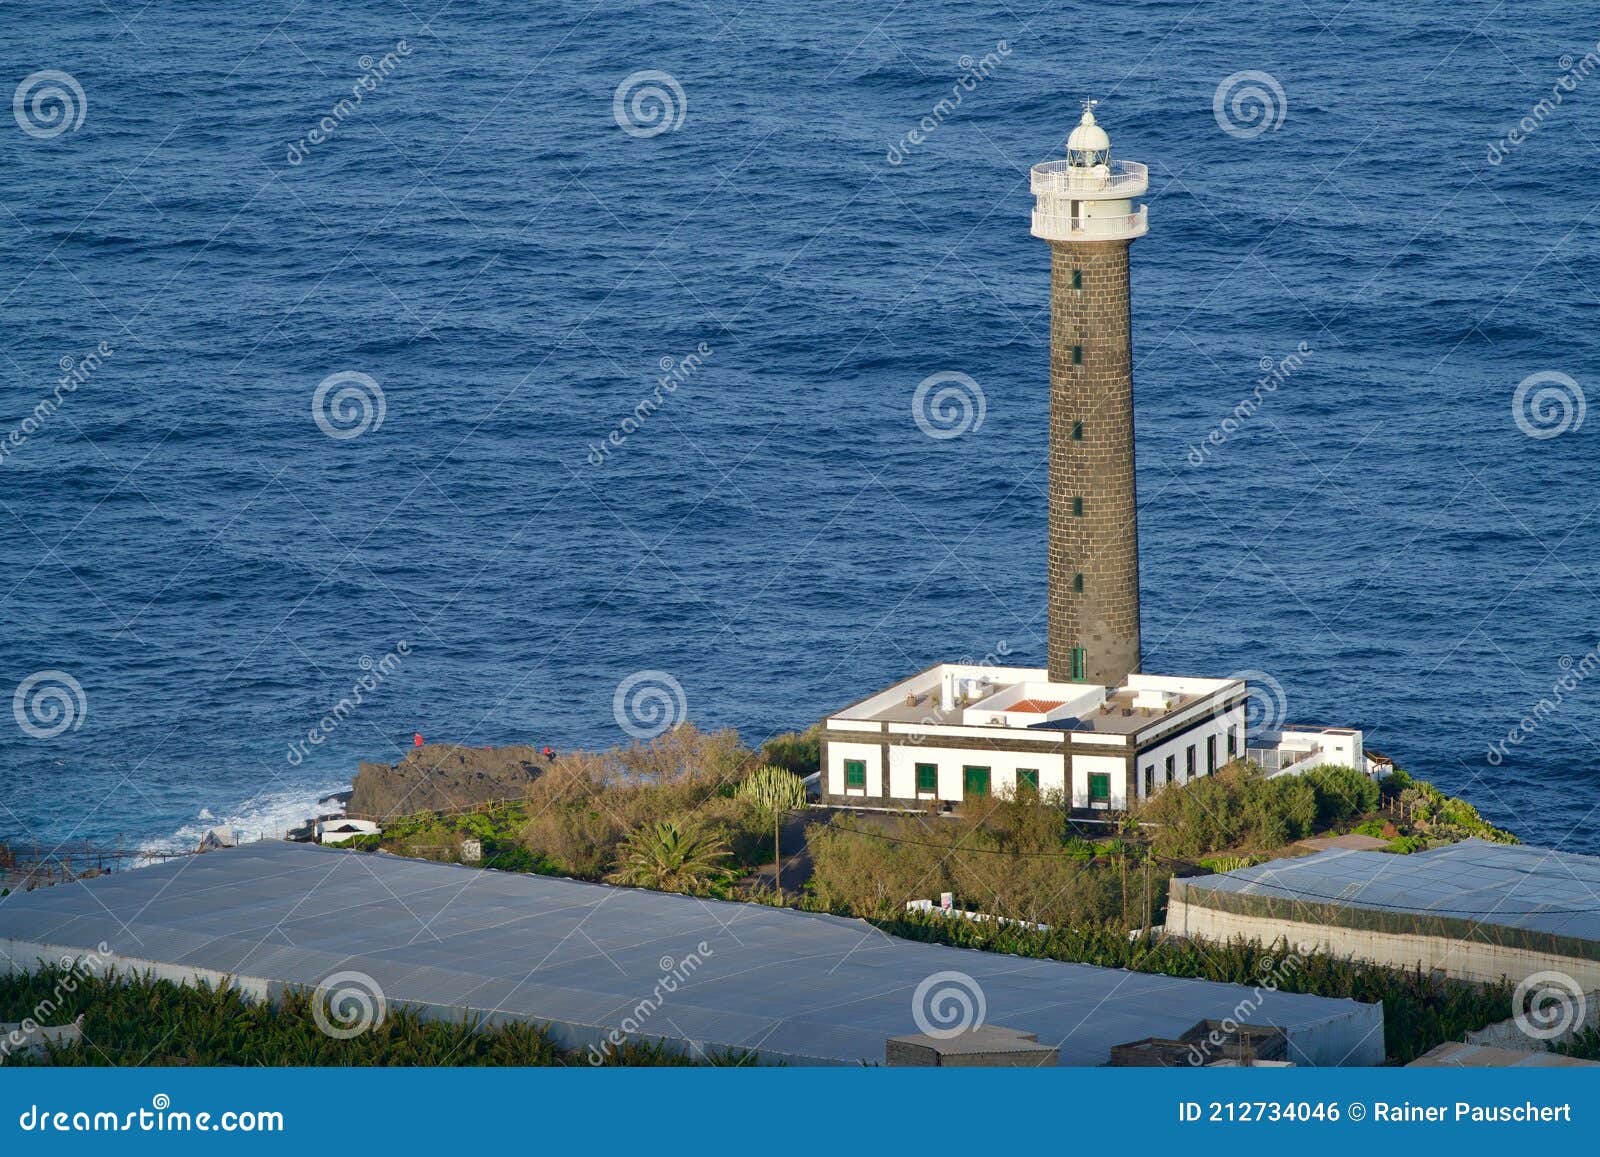 lighthouse of la palma